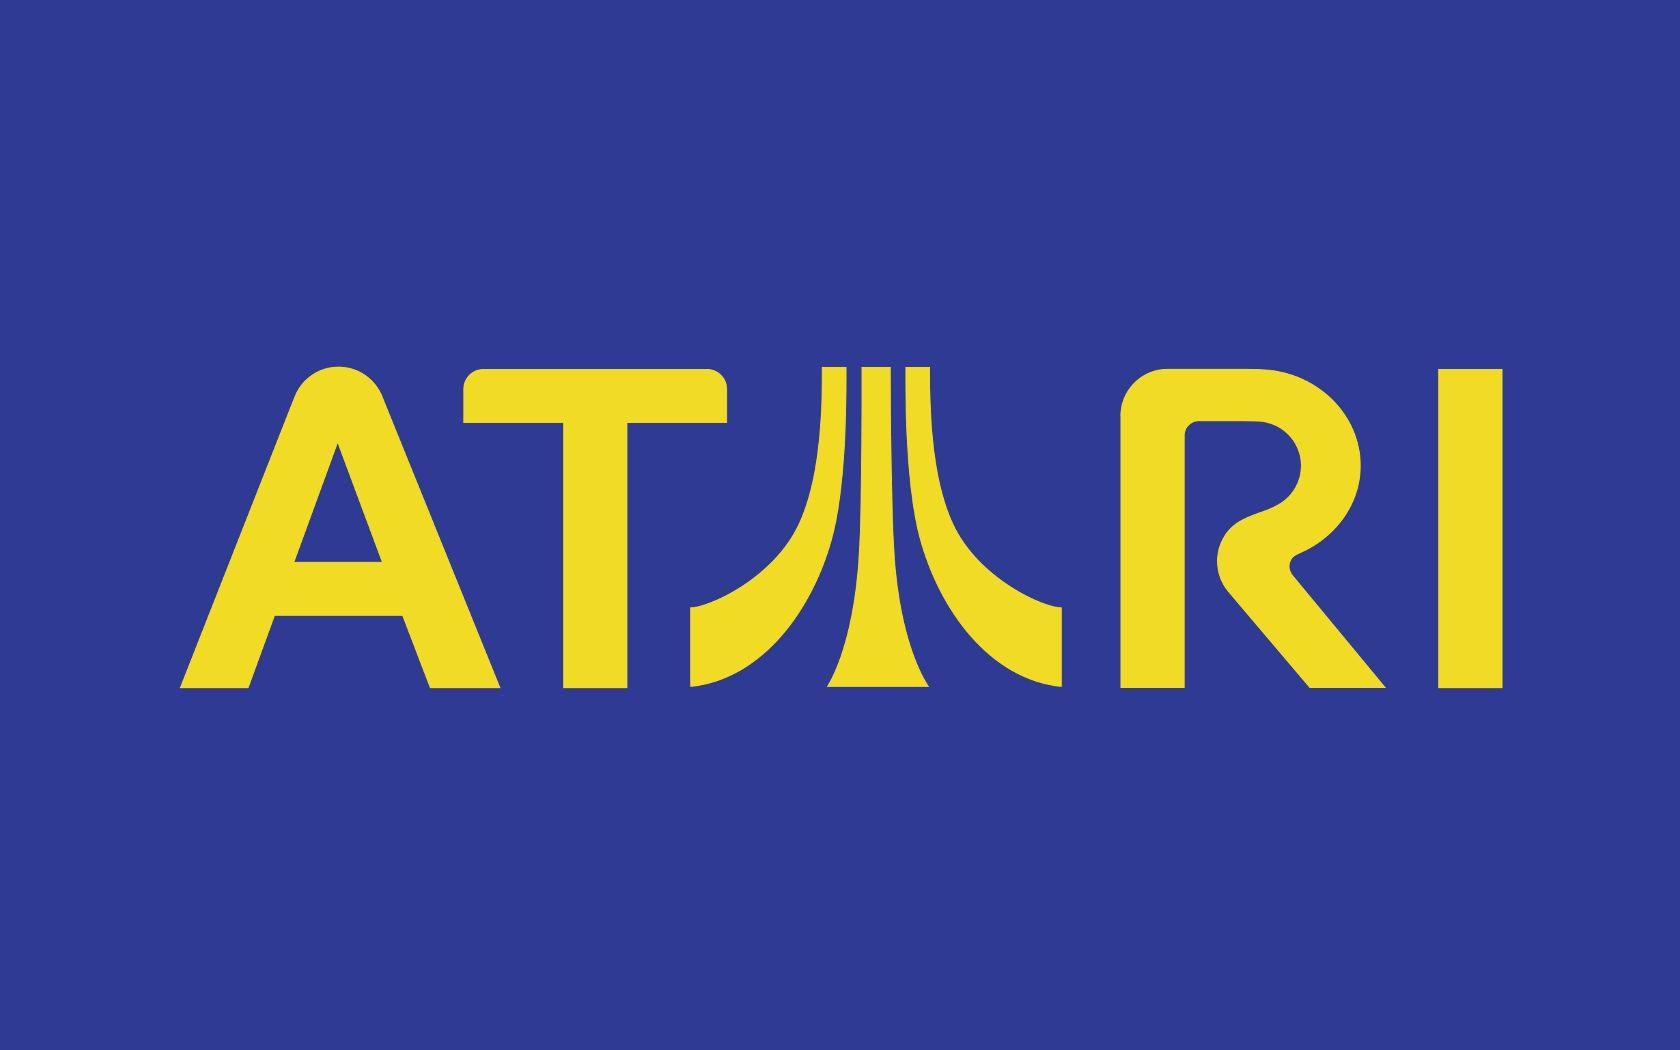 Atari 19621 1680x1050 px